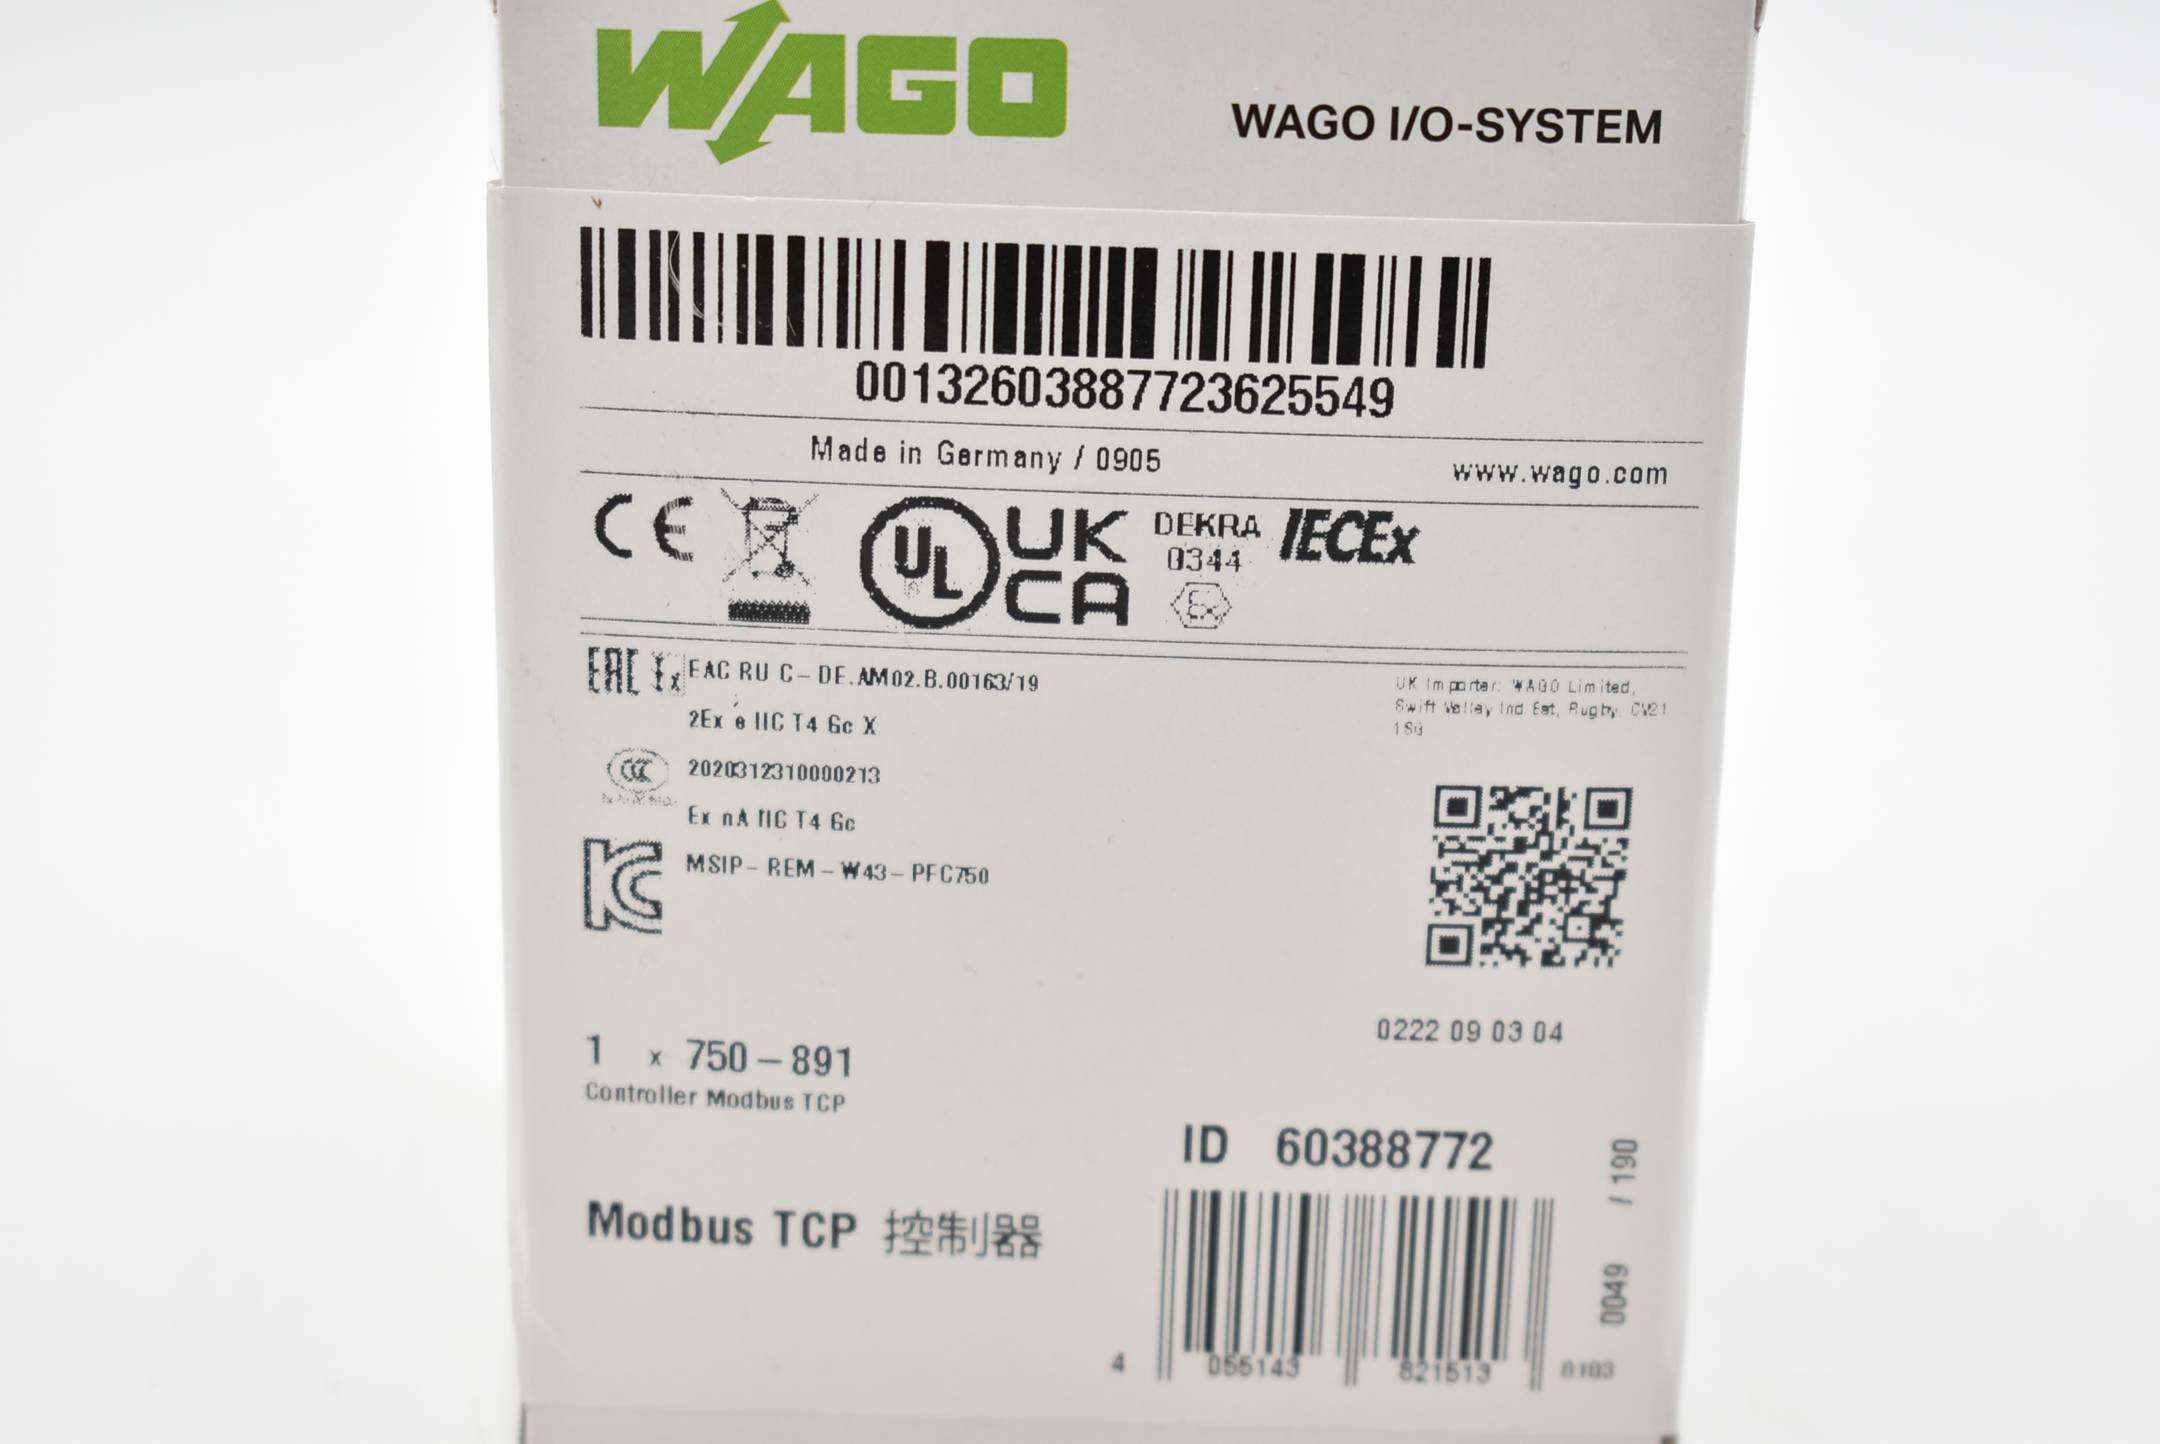 Wago I/O-System Controller Modbus TCP 750-891 